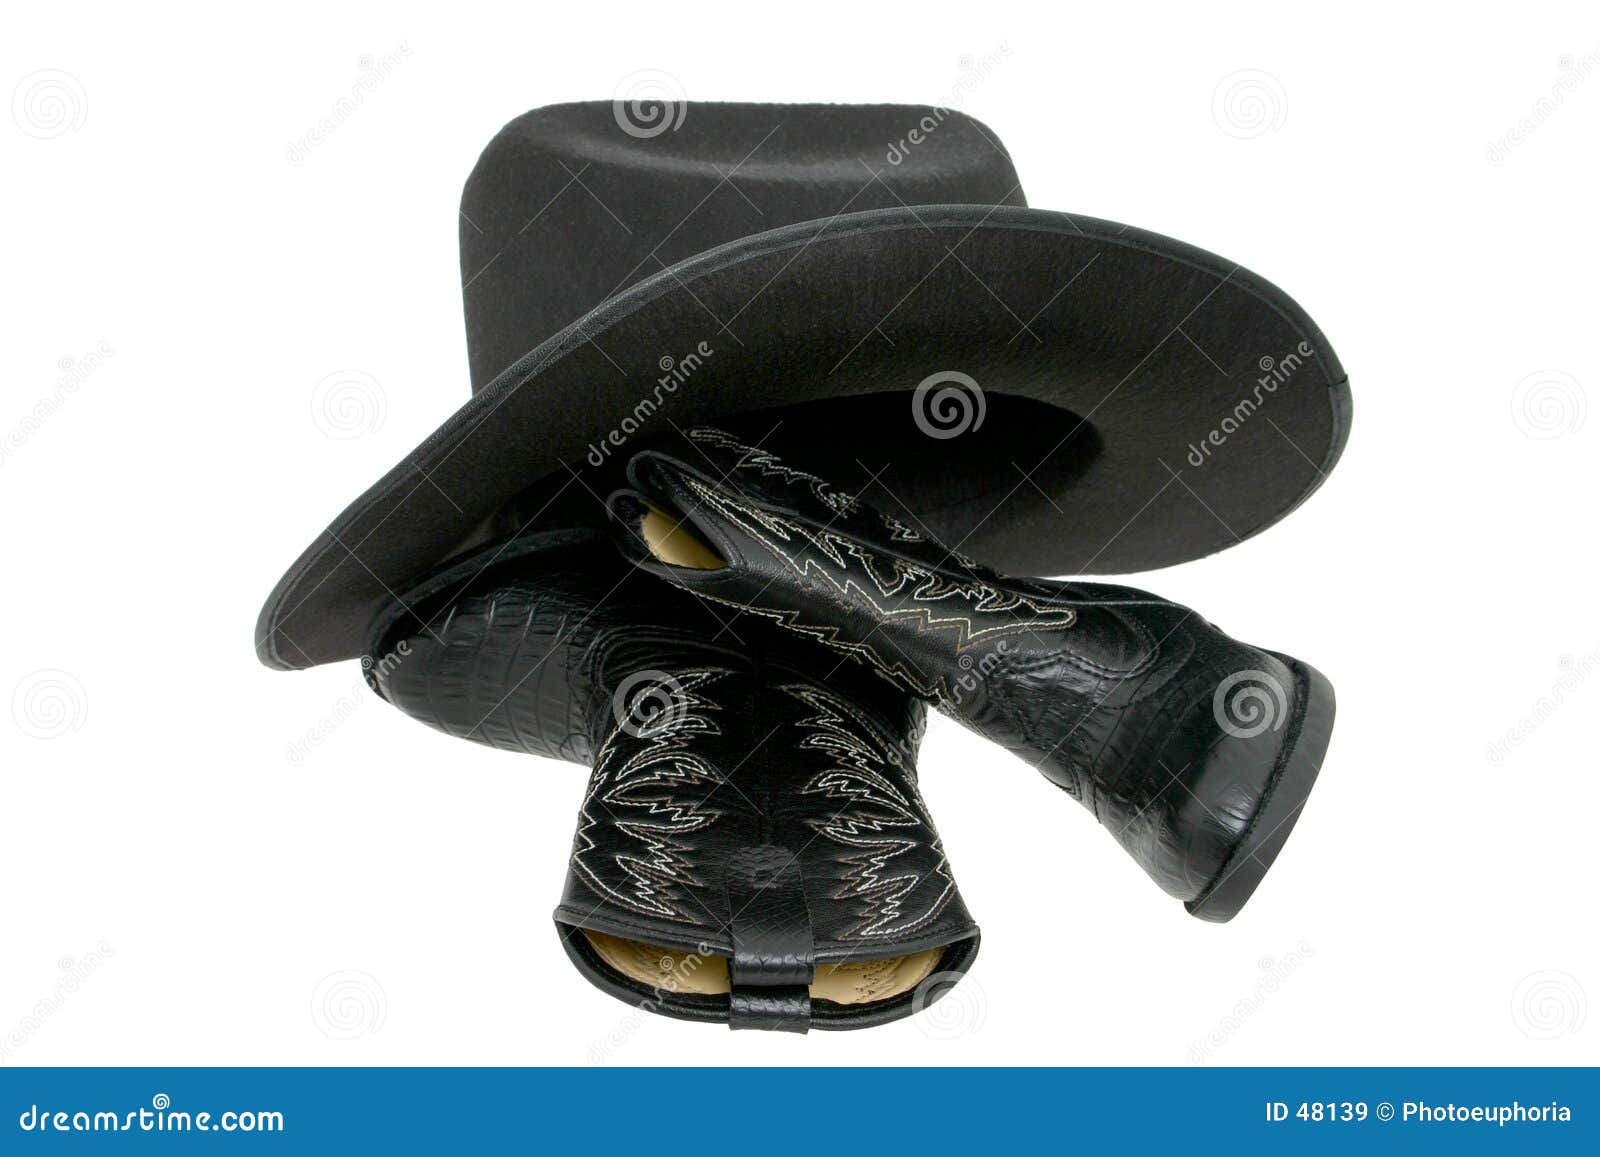 cowboy boots & hat